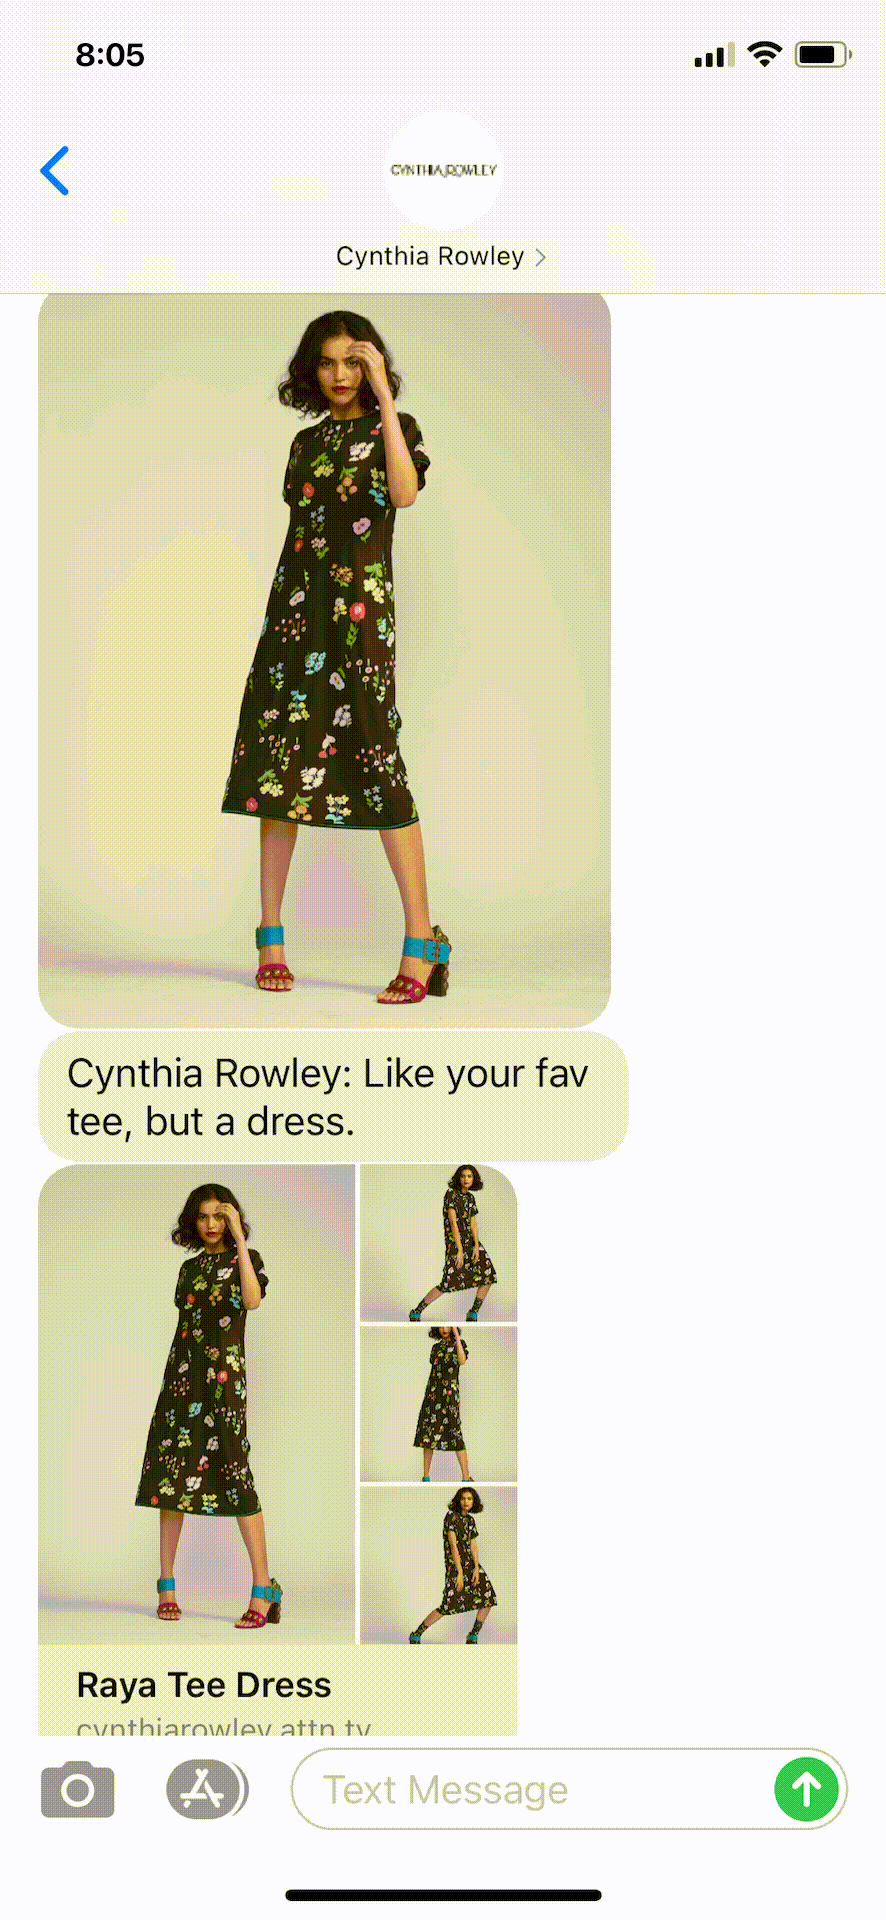 Cynthia-Rowley-Text-Message-Marketing-Example-04.07.2021